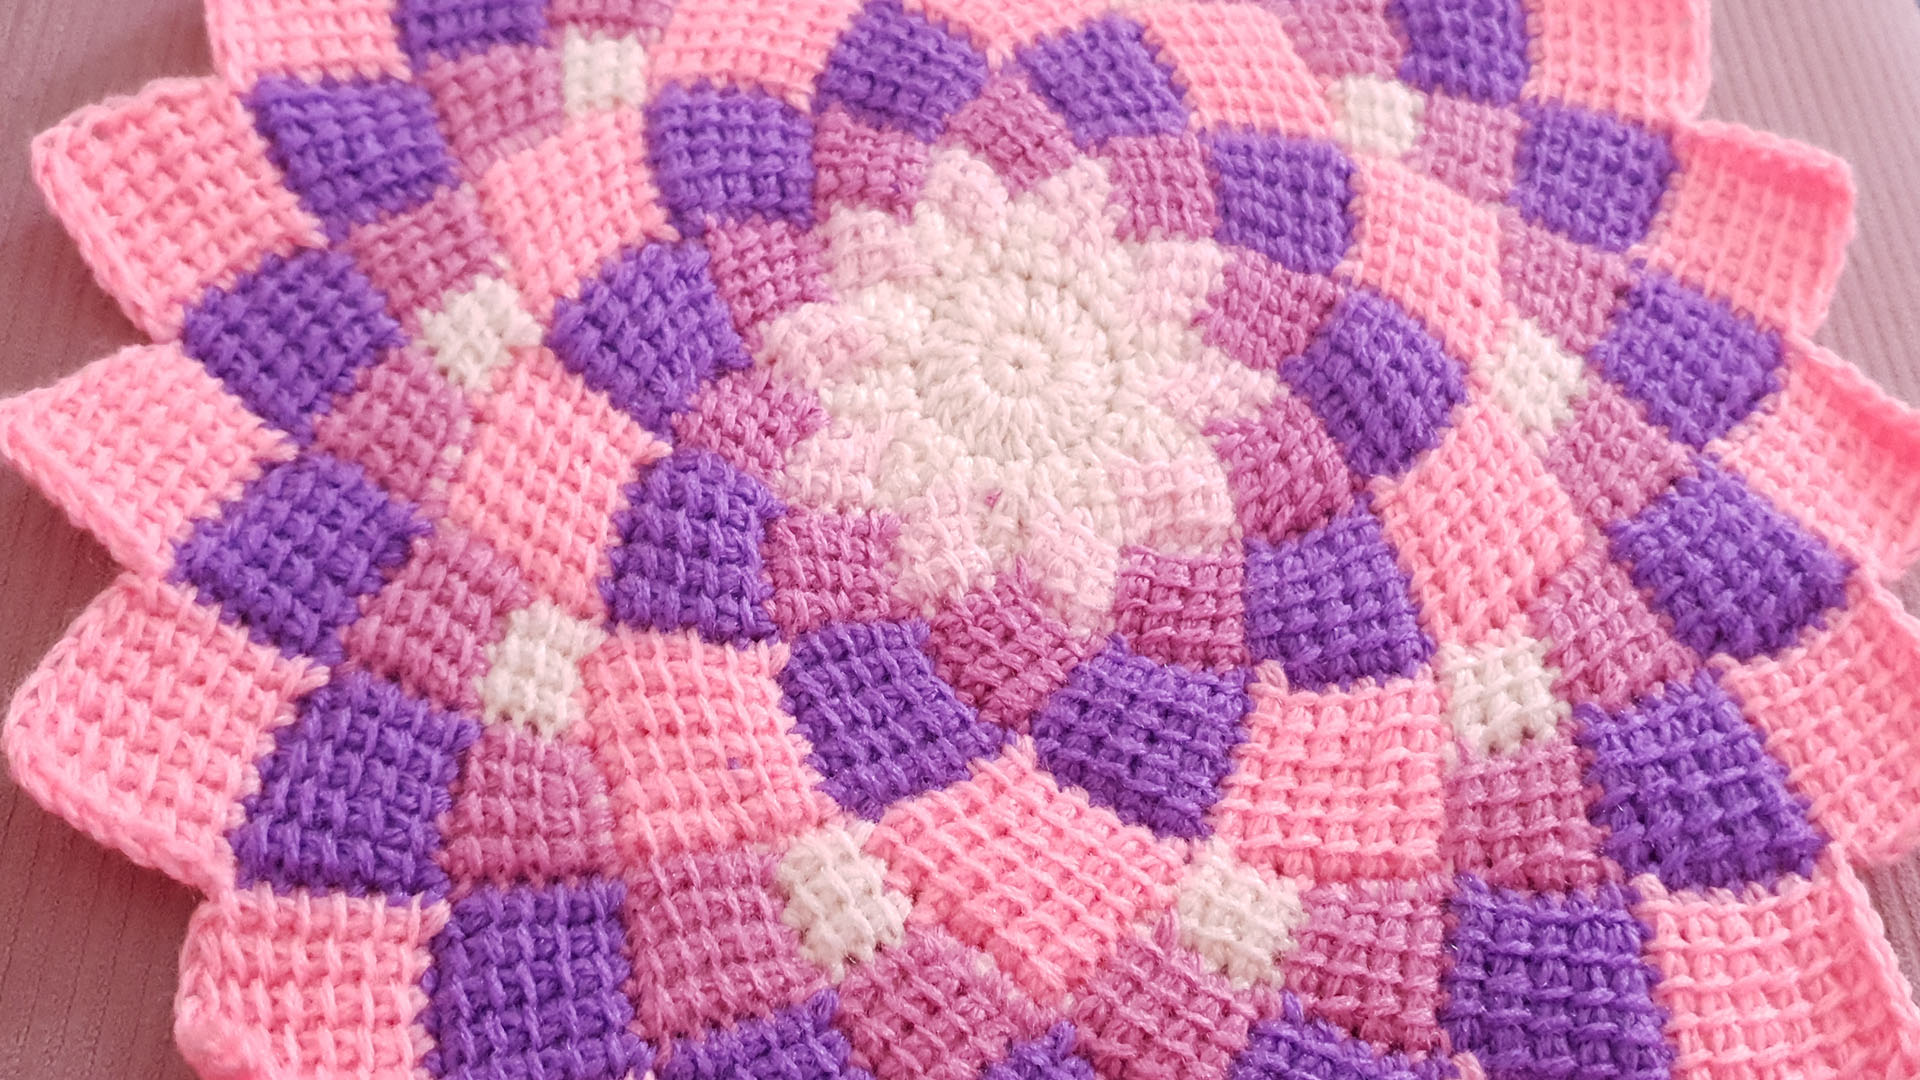 Tunisian crochet in round